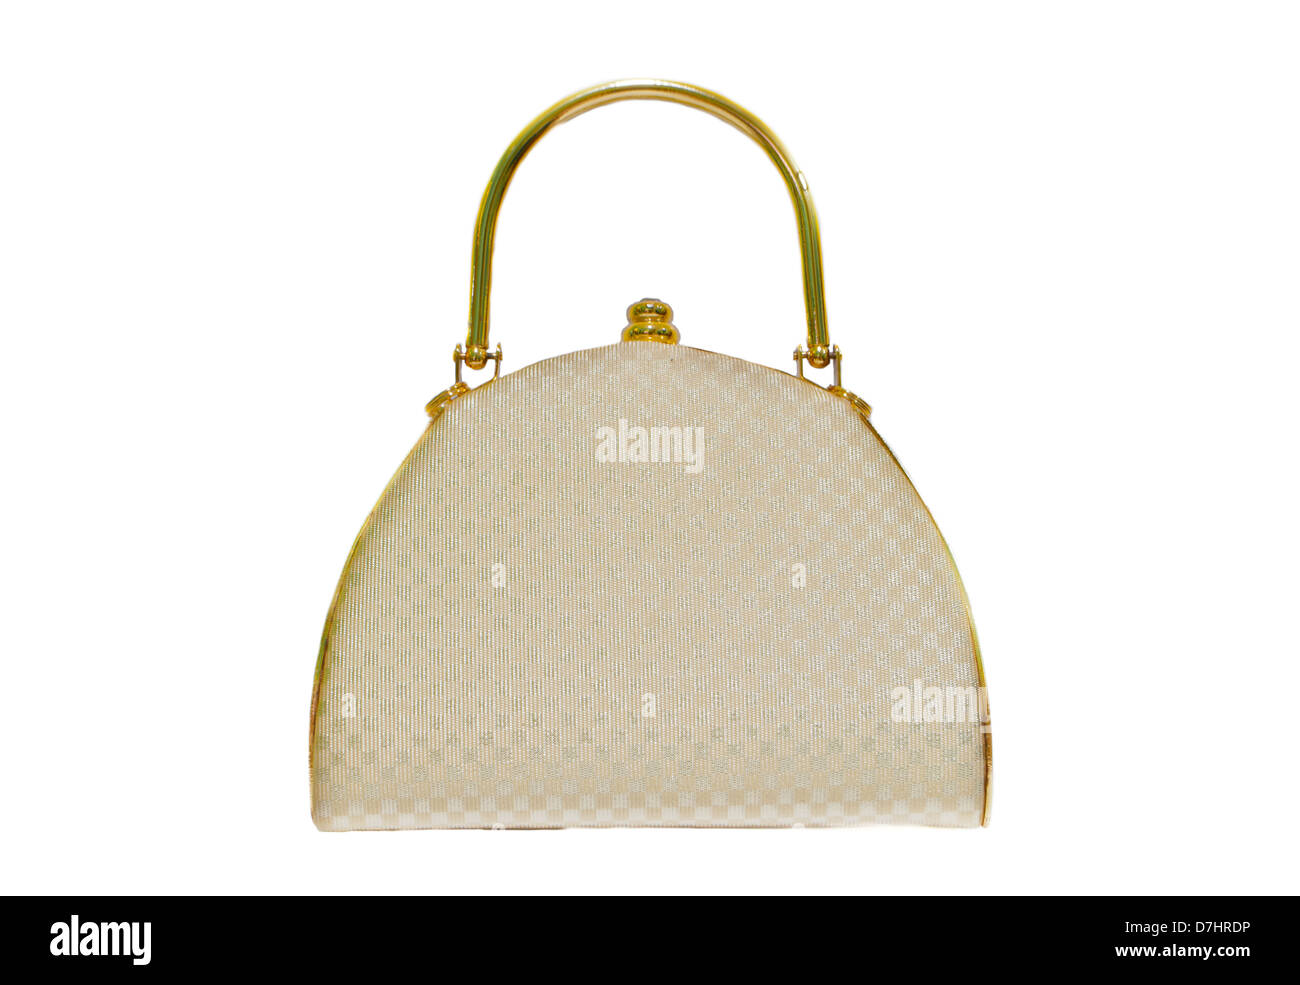 A golden handbag isolated on white background. Stock Photo